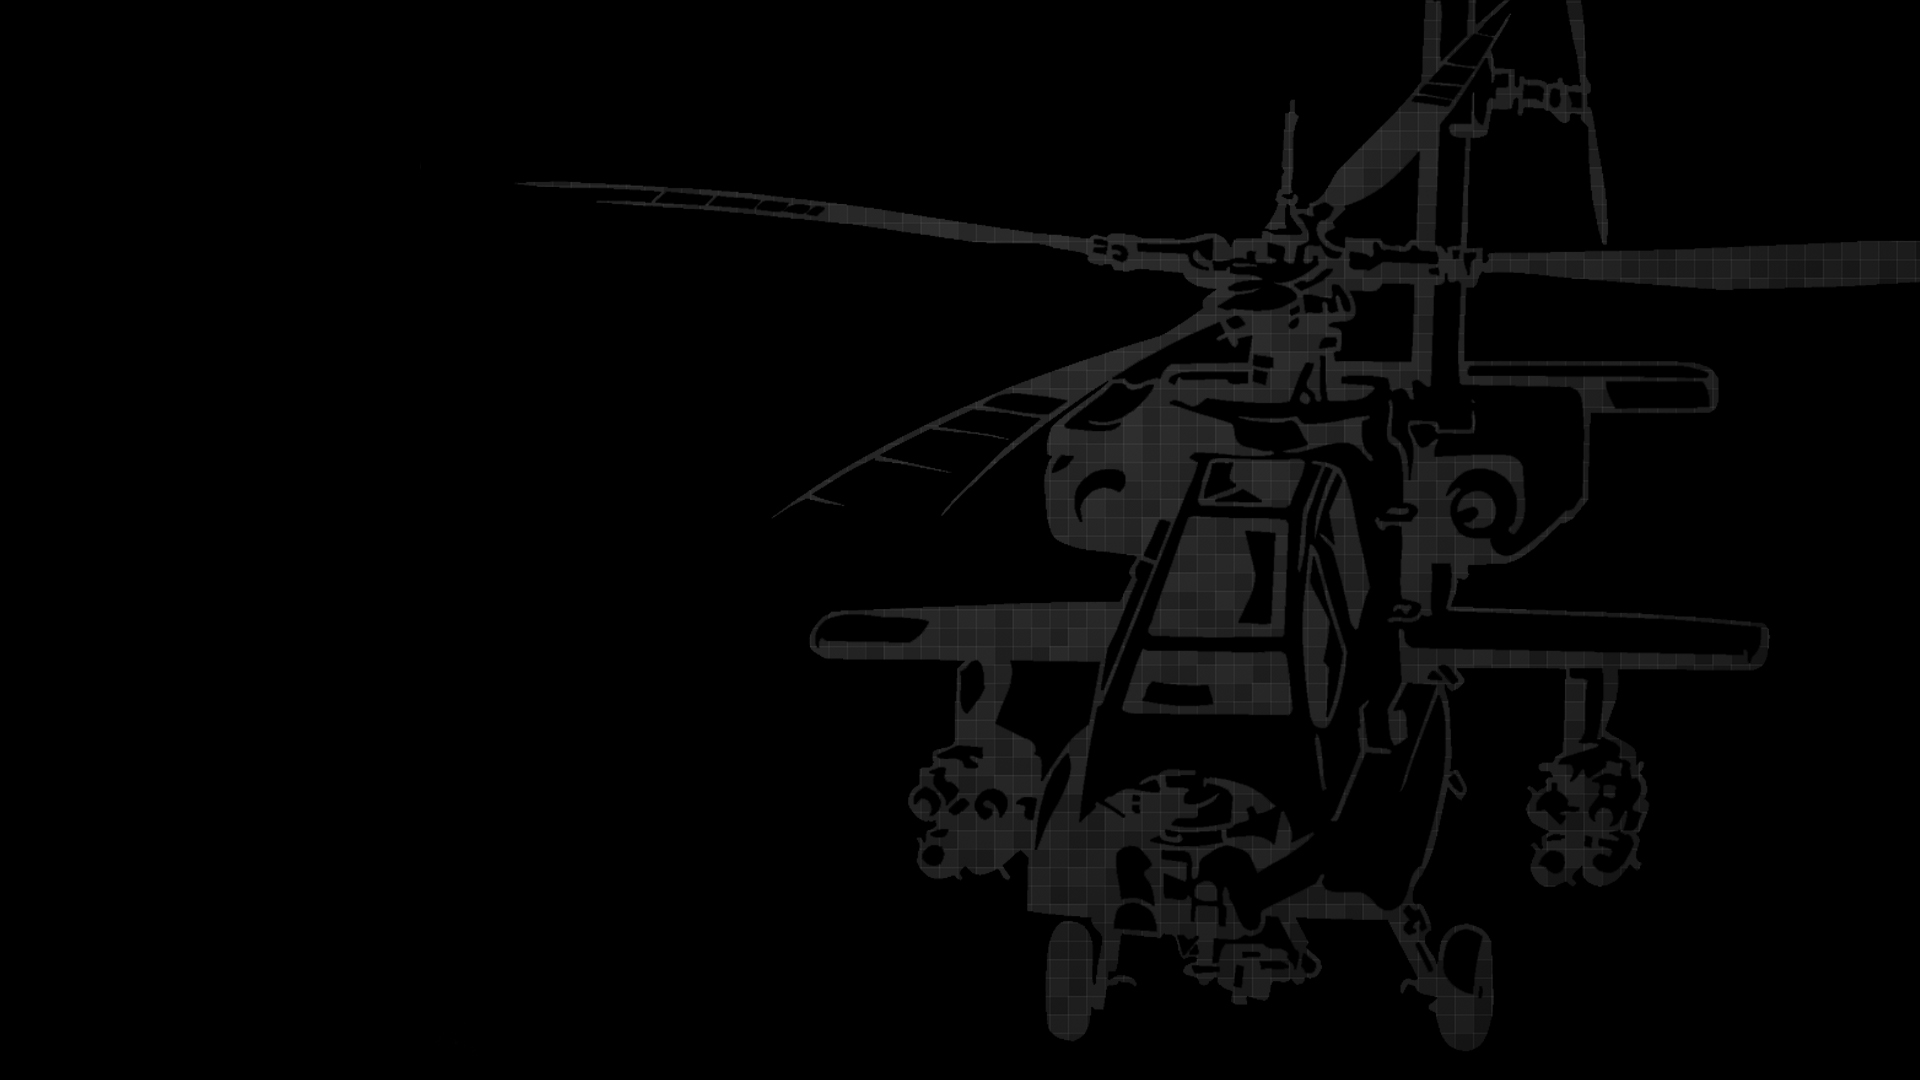 AH-64 Apache - desktop wallpaper